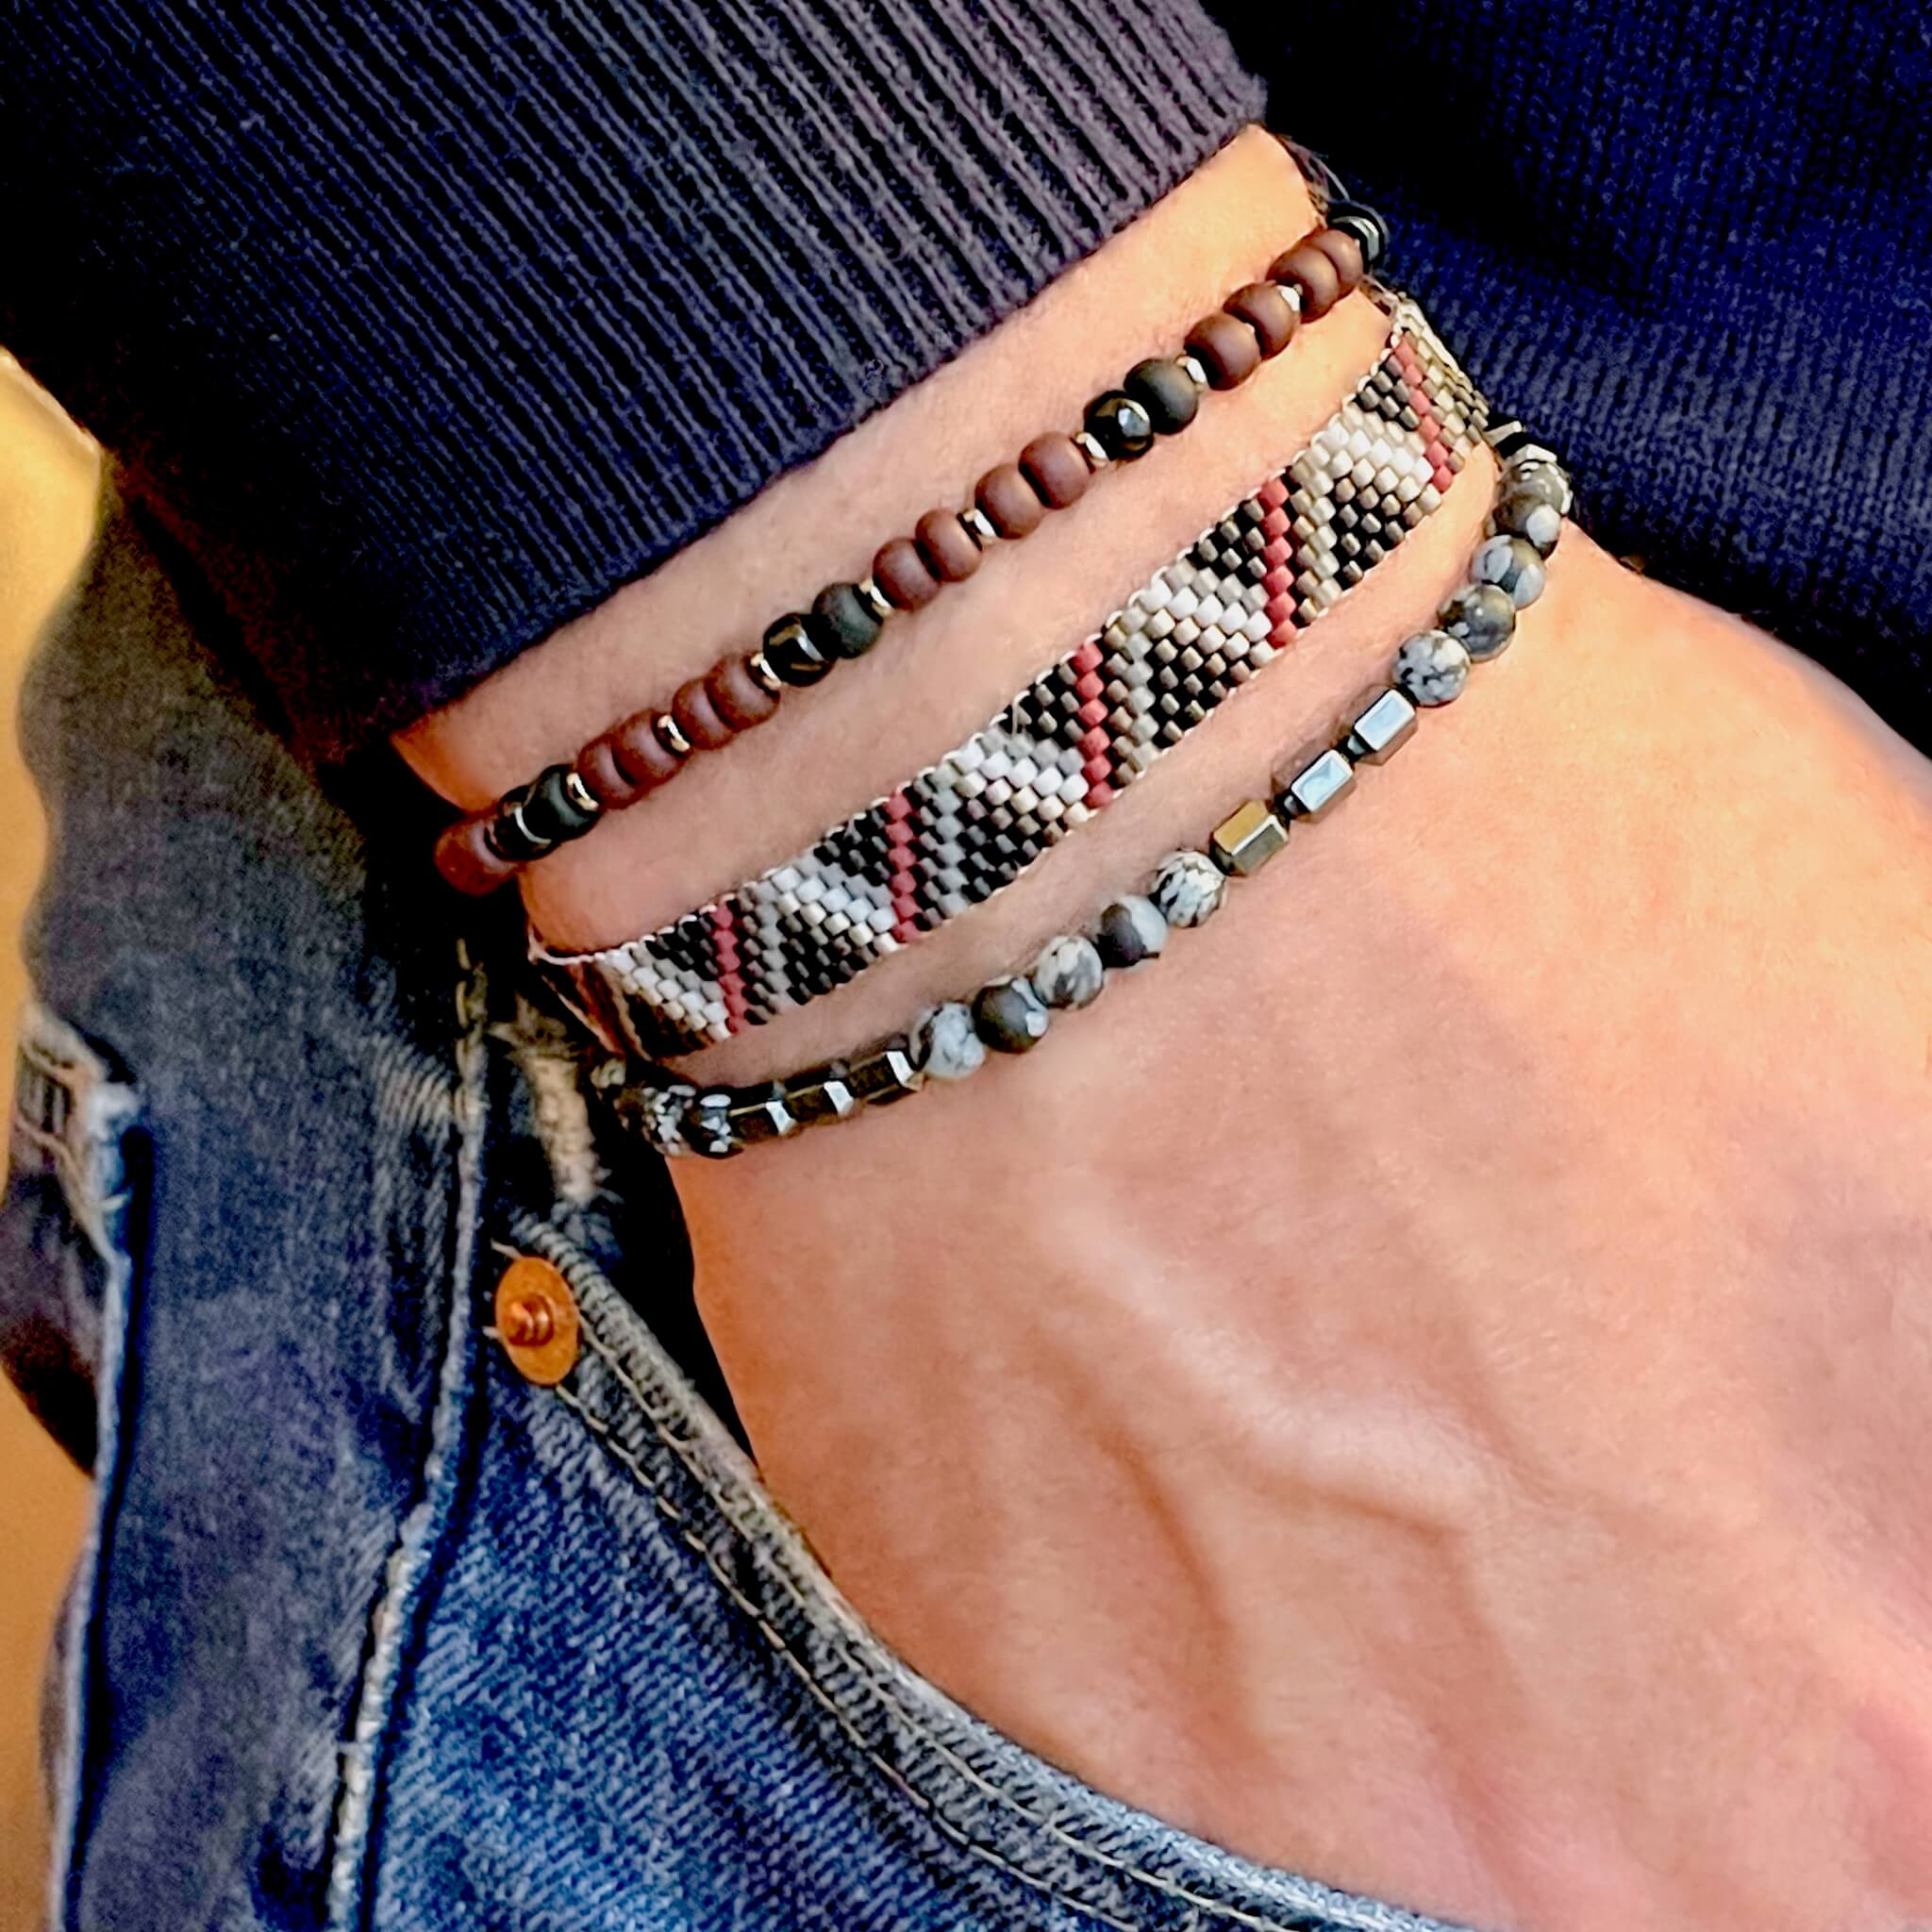 Stylish Men's Bracelets Collection - Soni Fashion®